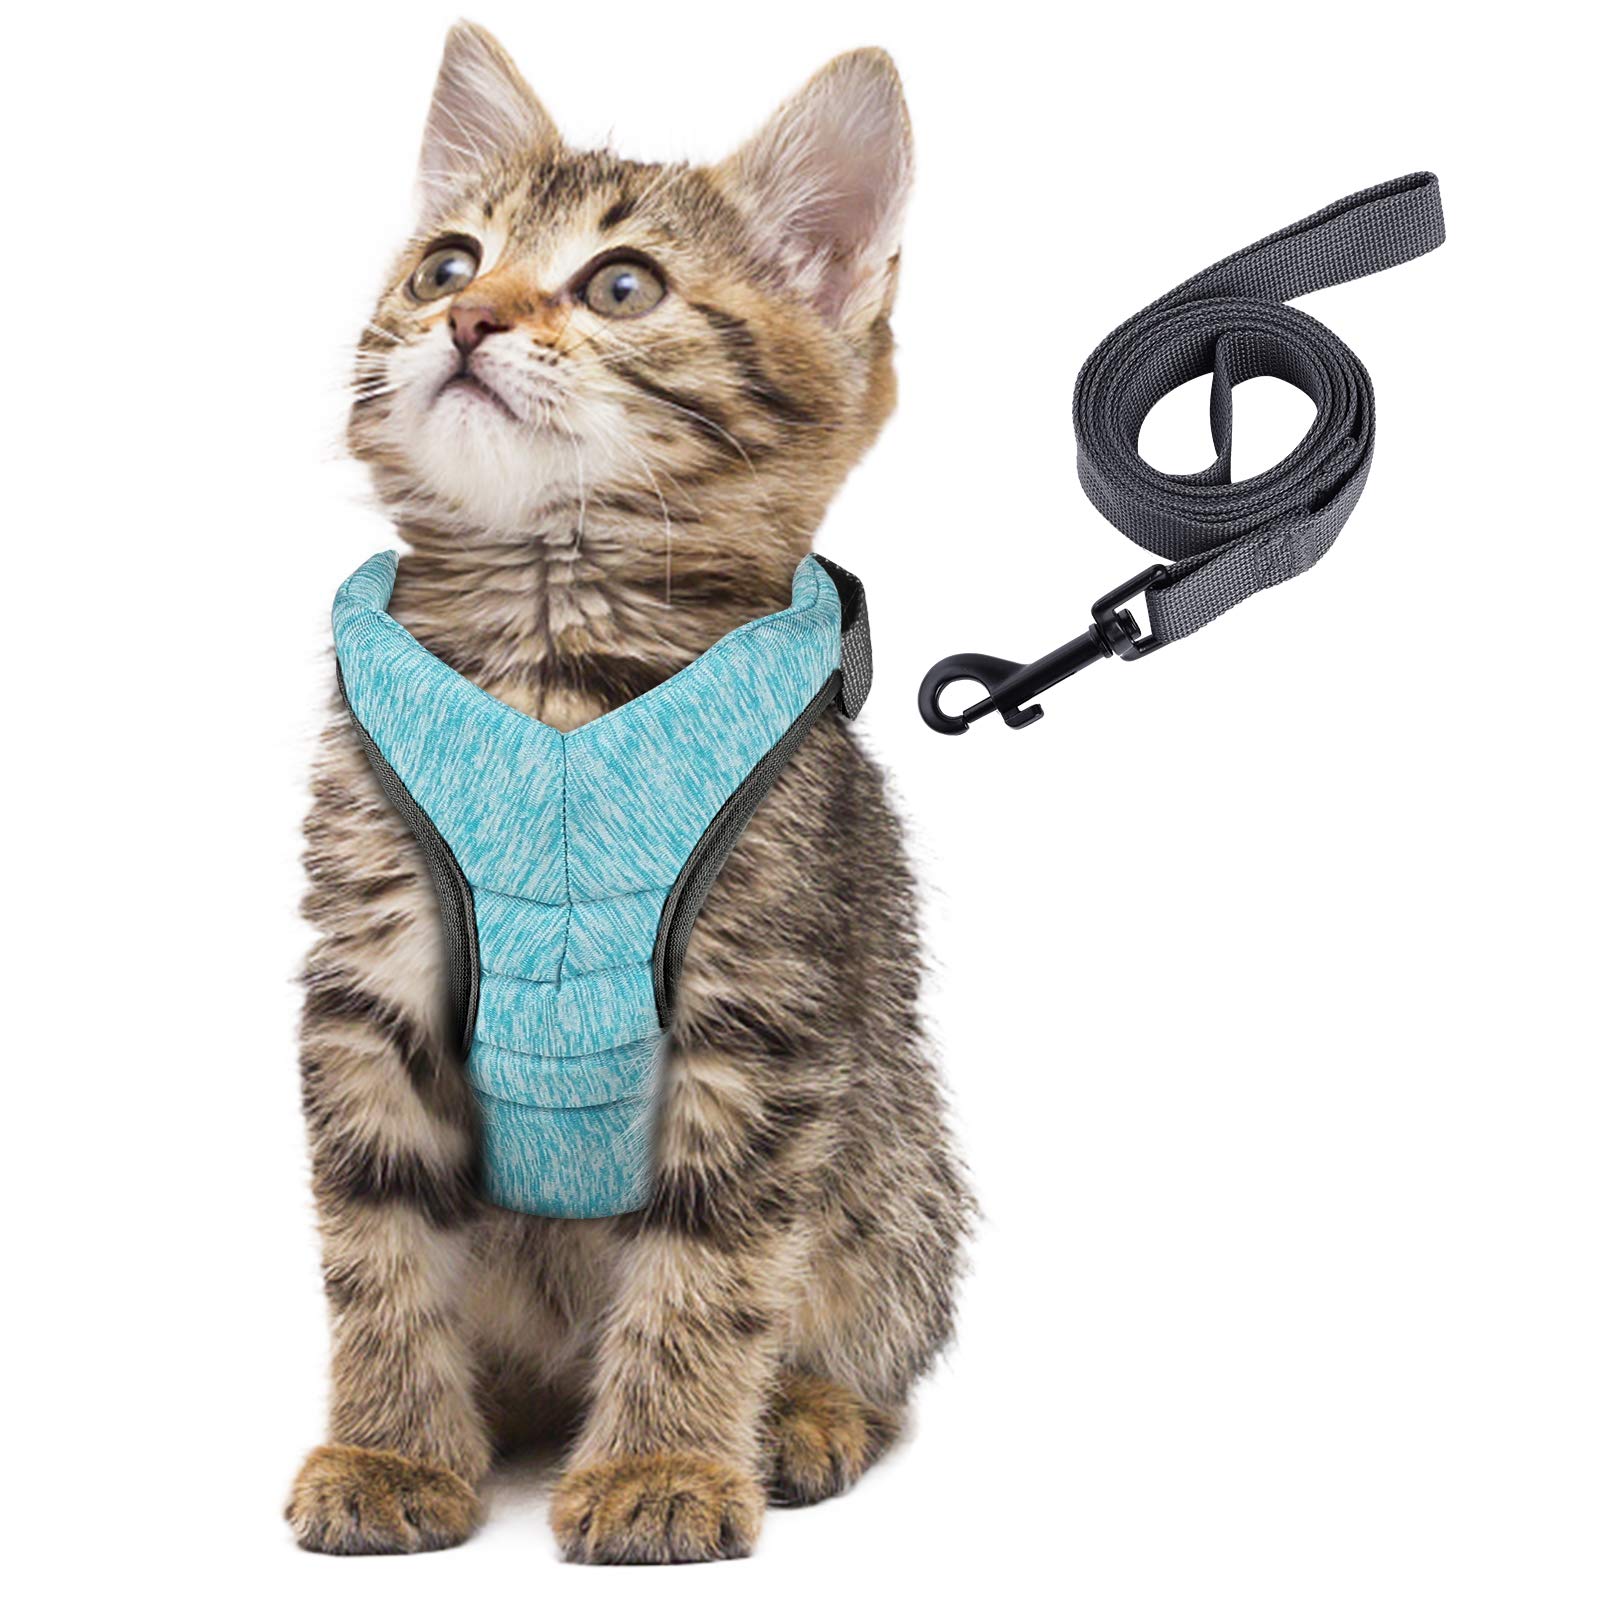 Simpeak Pet Cat Leash and Harness for Walking